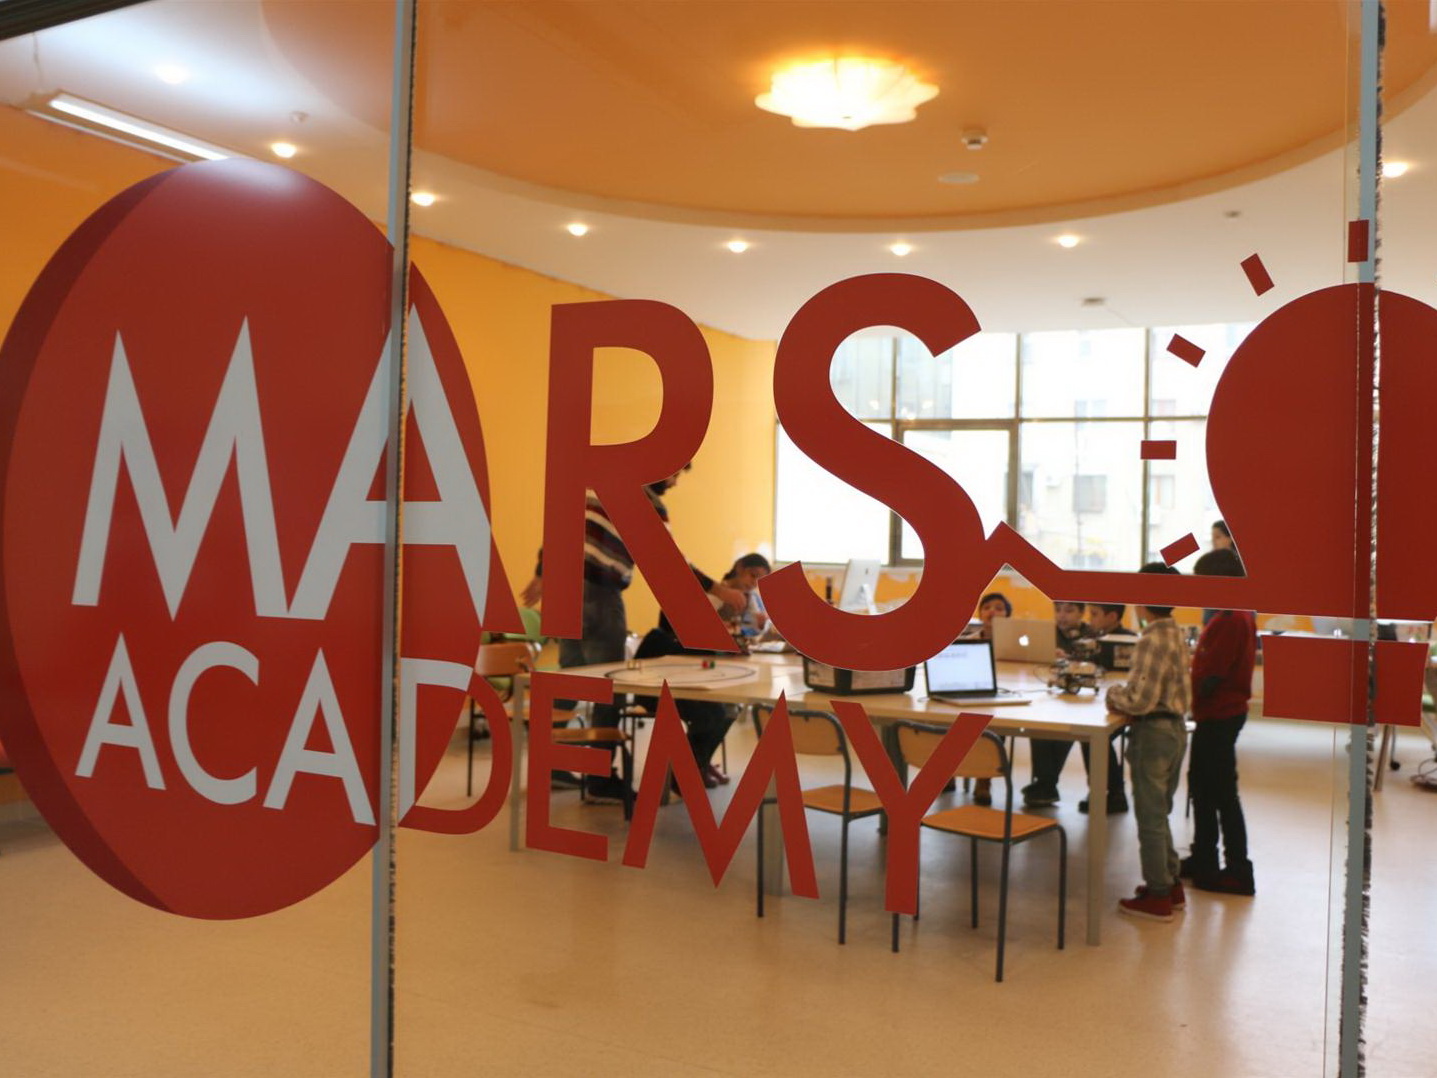 Mars Academy